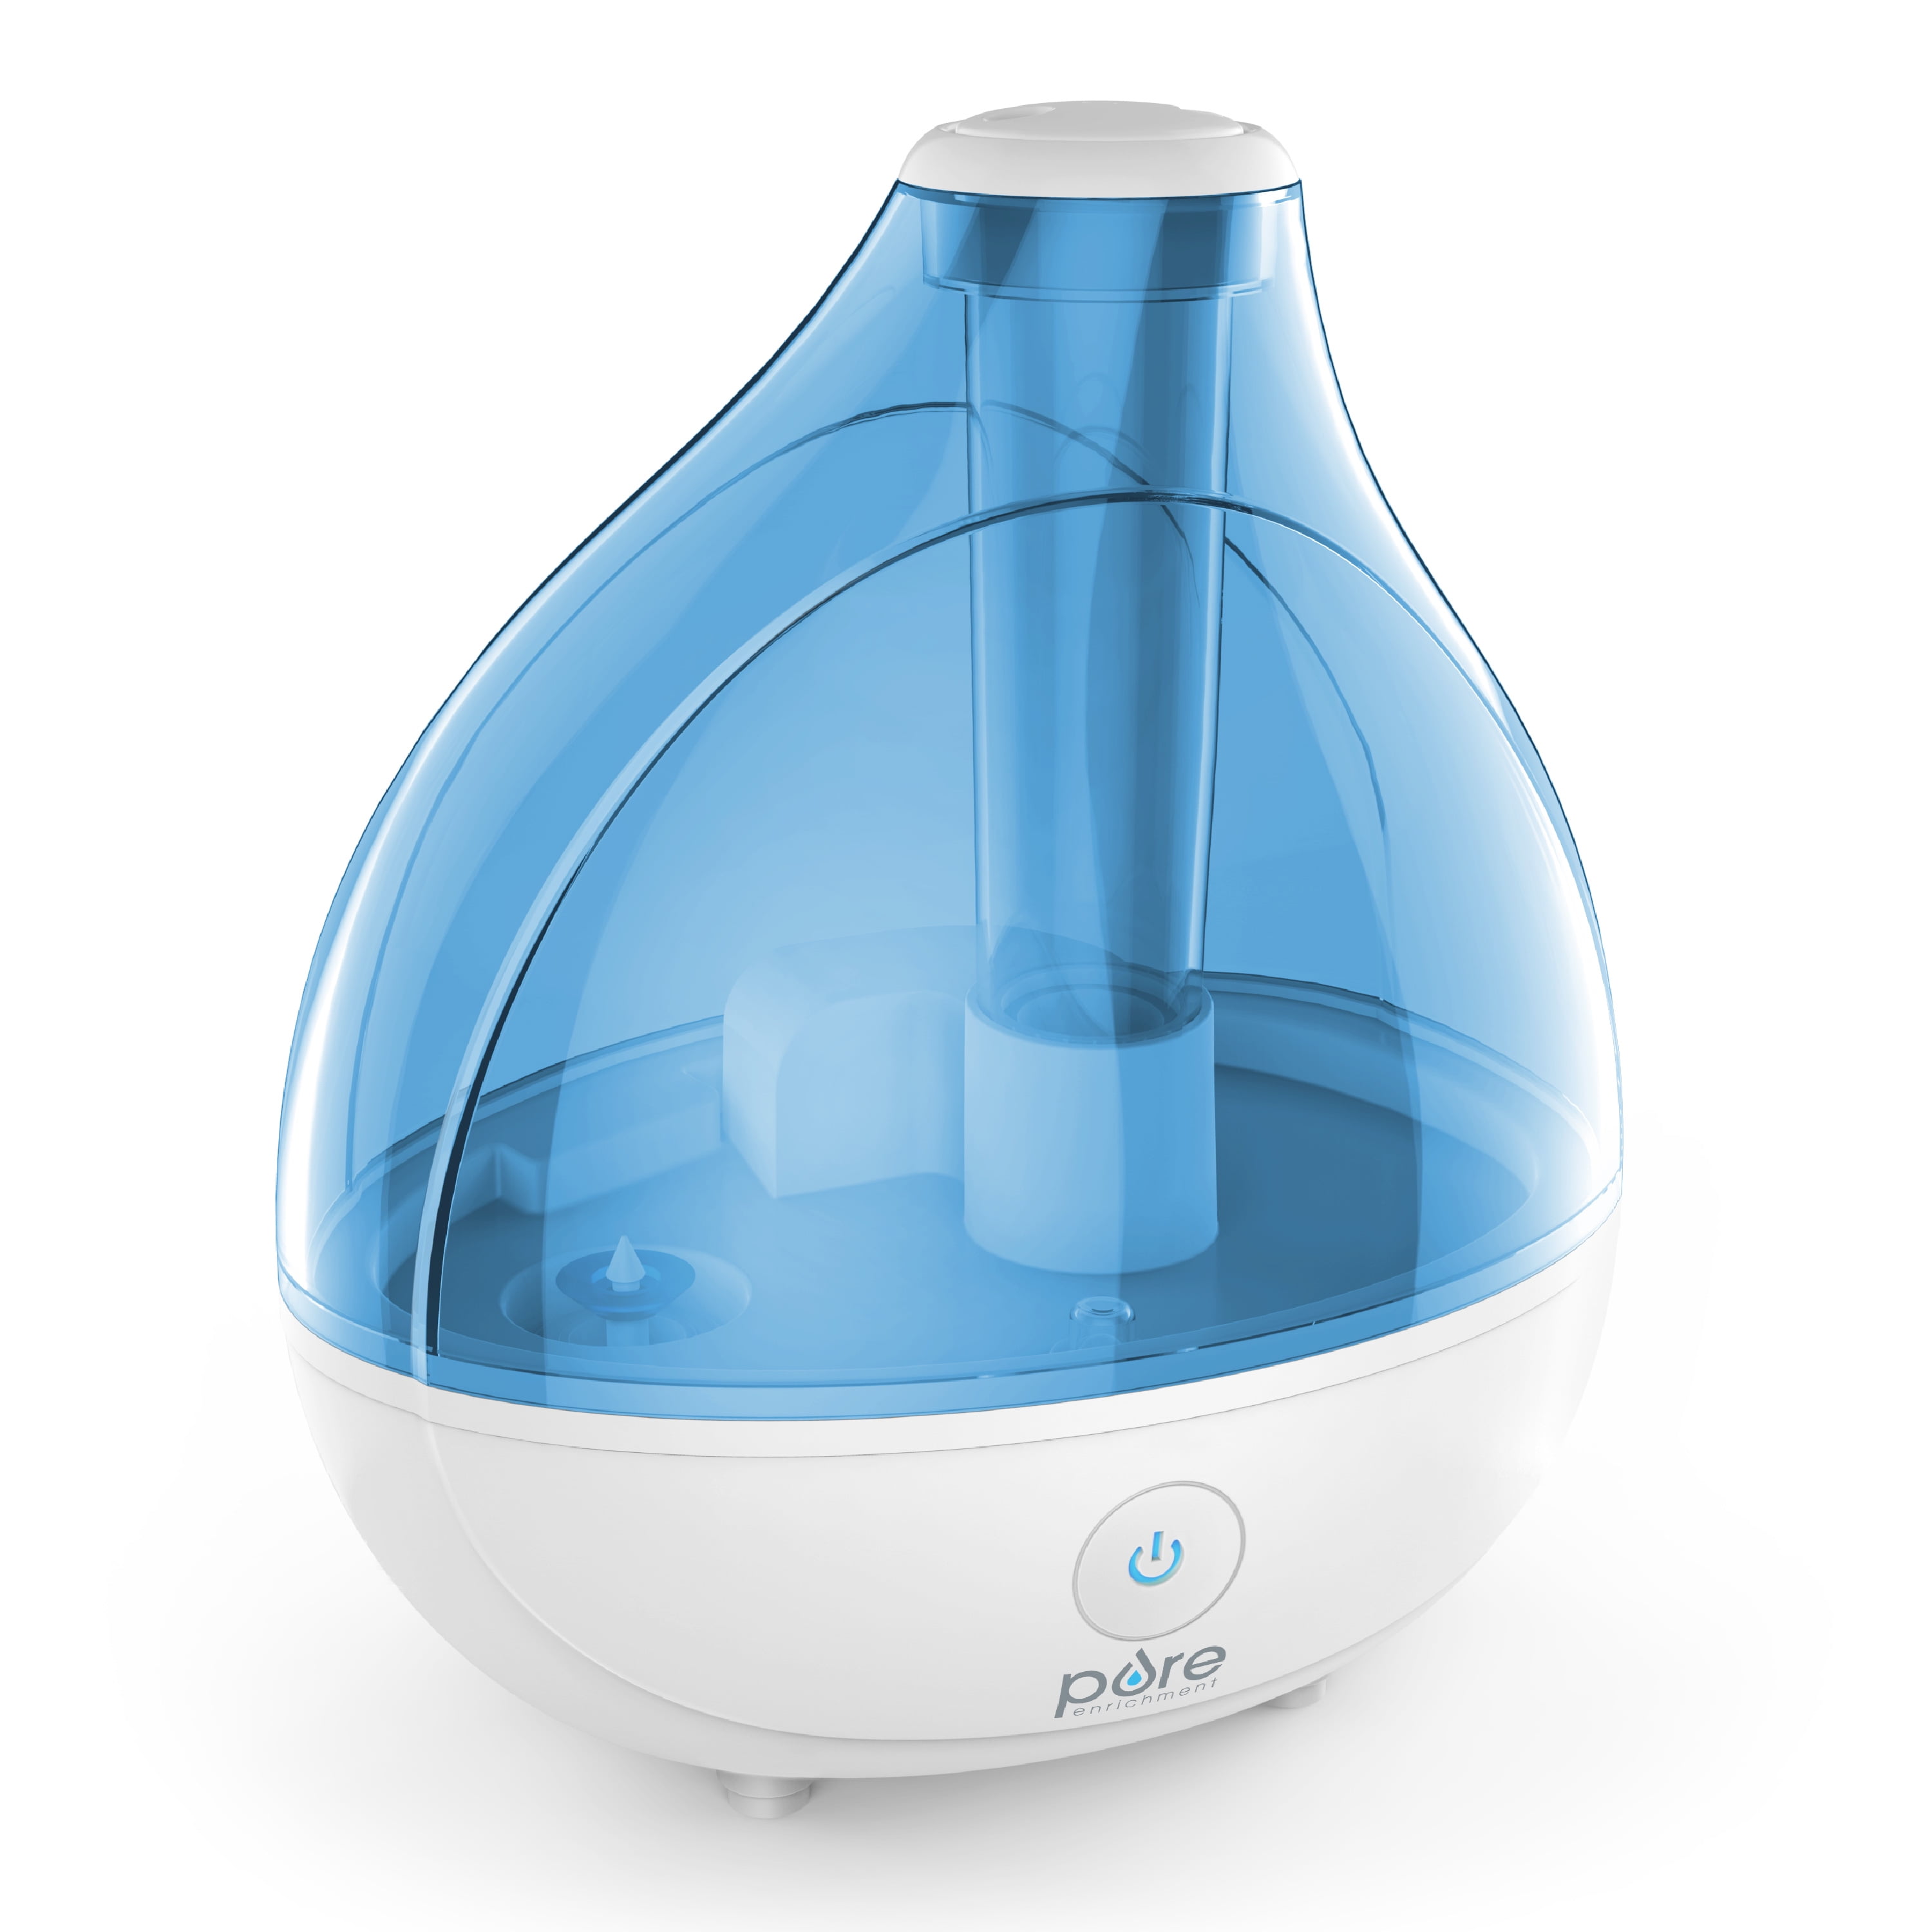 250ml Air Humidifier Cute Kawaiil Aroma Diffuser with Night Light Home Cool  Mist